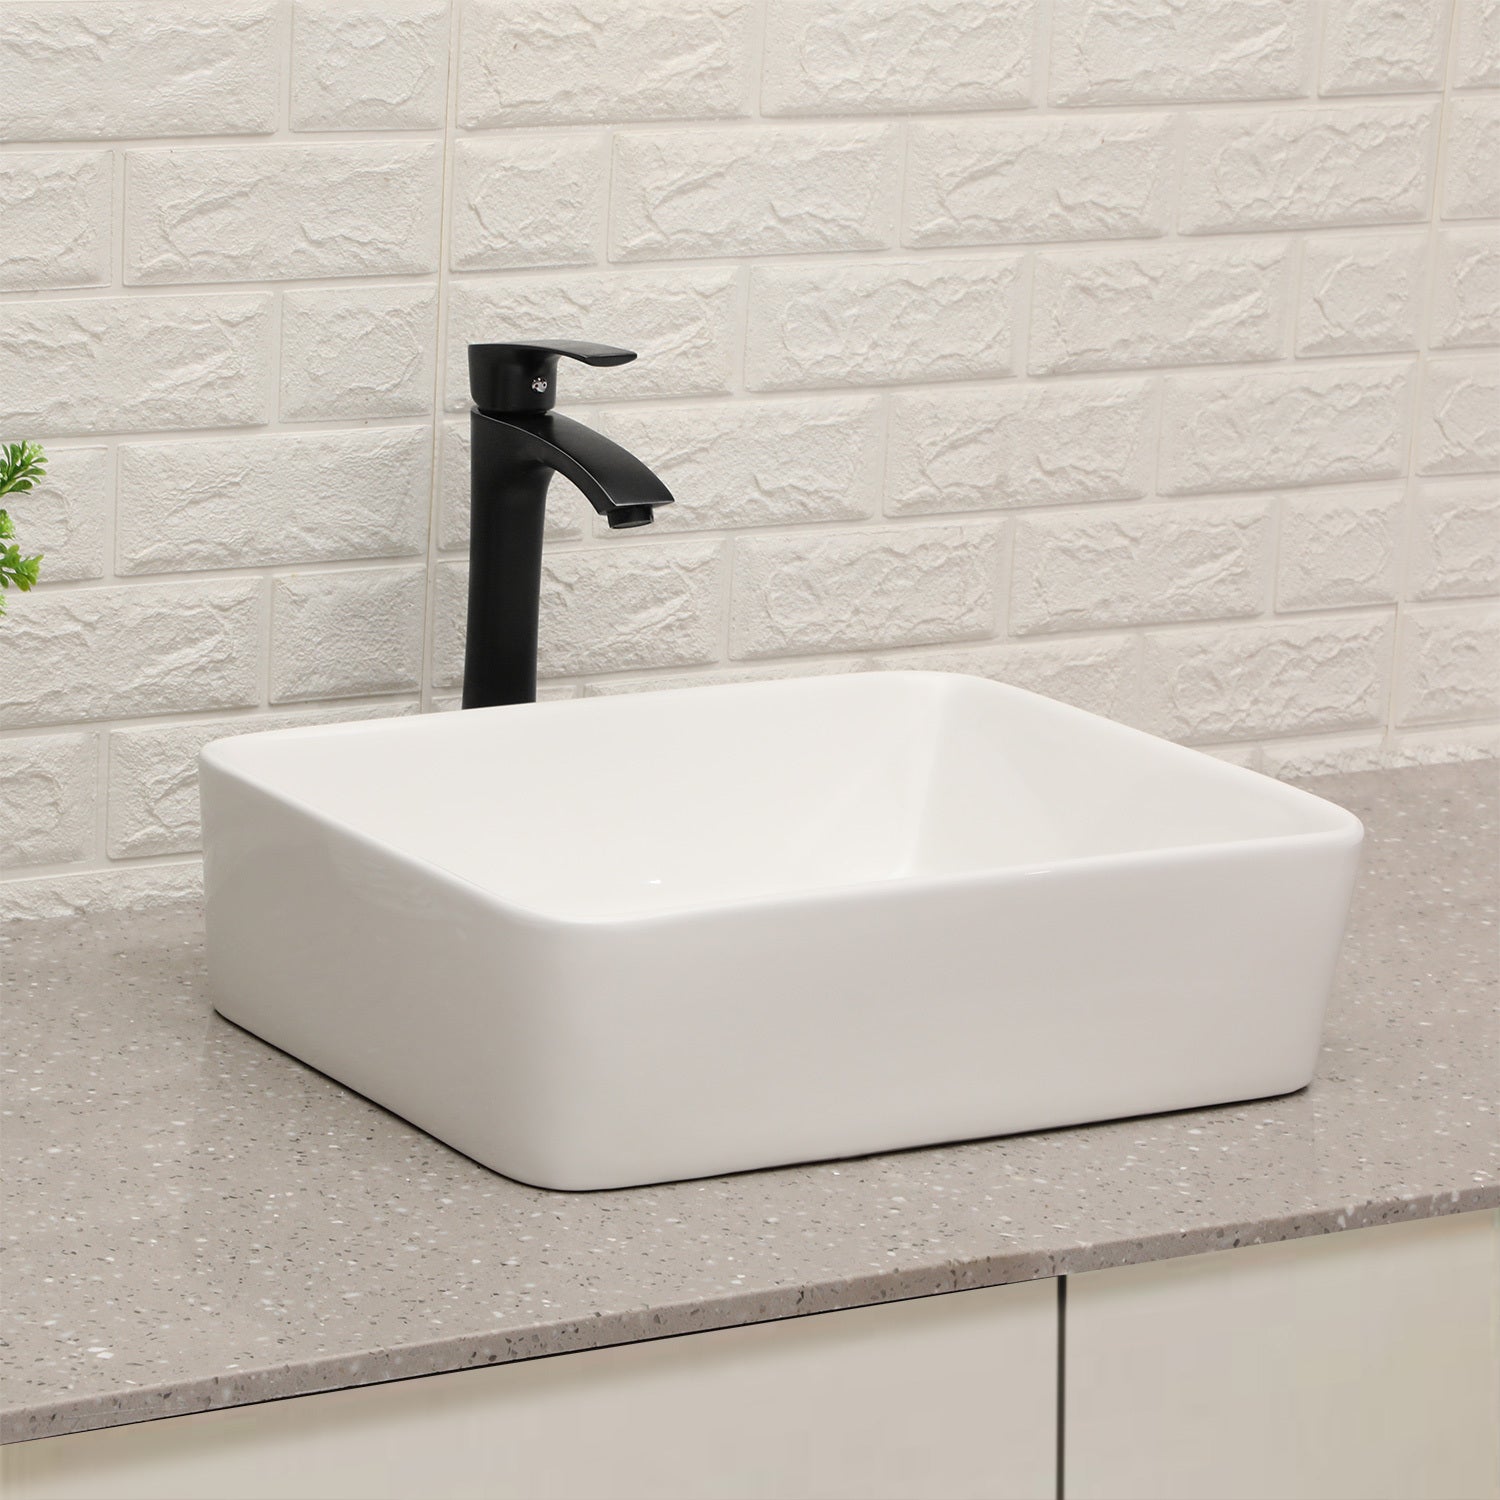 19"x15" Rectangle Vessel Bathroom Sink and Matte Black white+black-ceramic